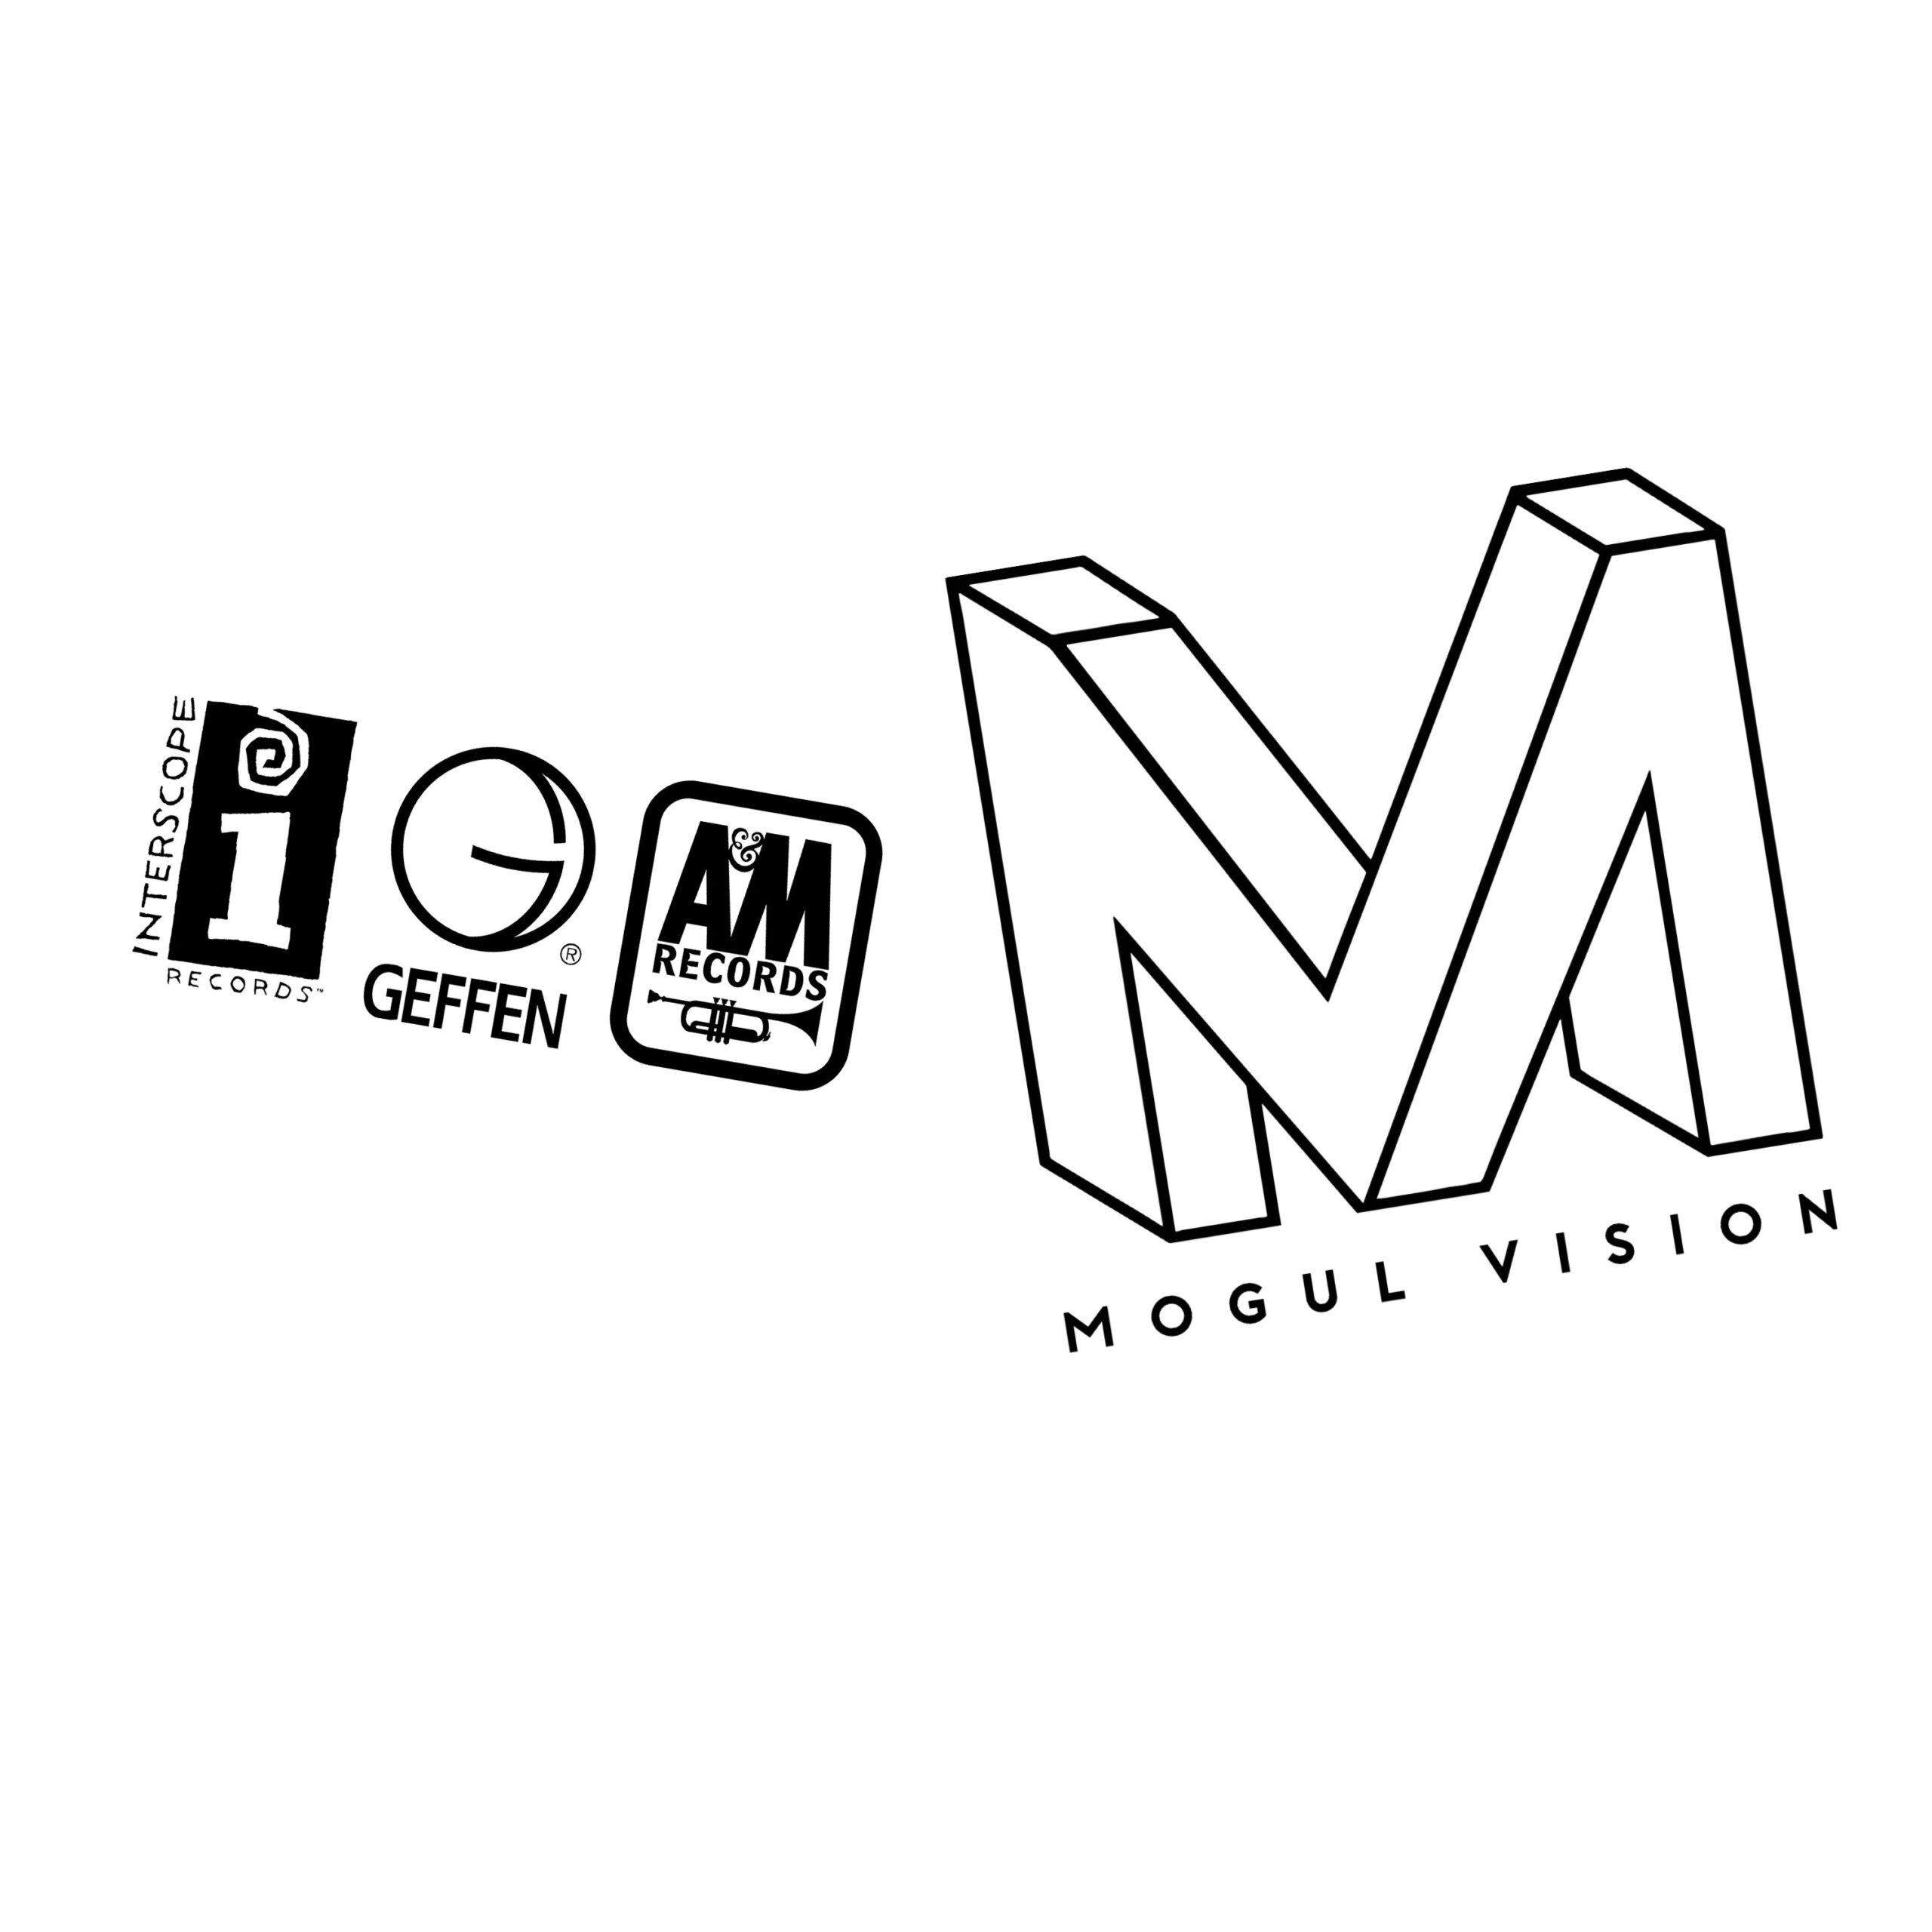 Josh Marshall's Mogul Vision Signs Partnership With Interscope Geffen A&M